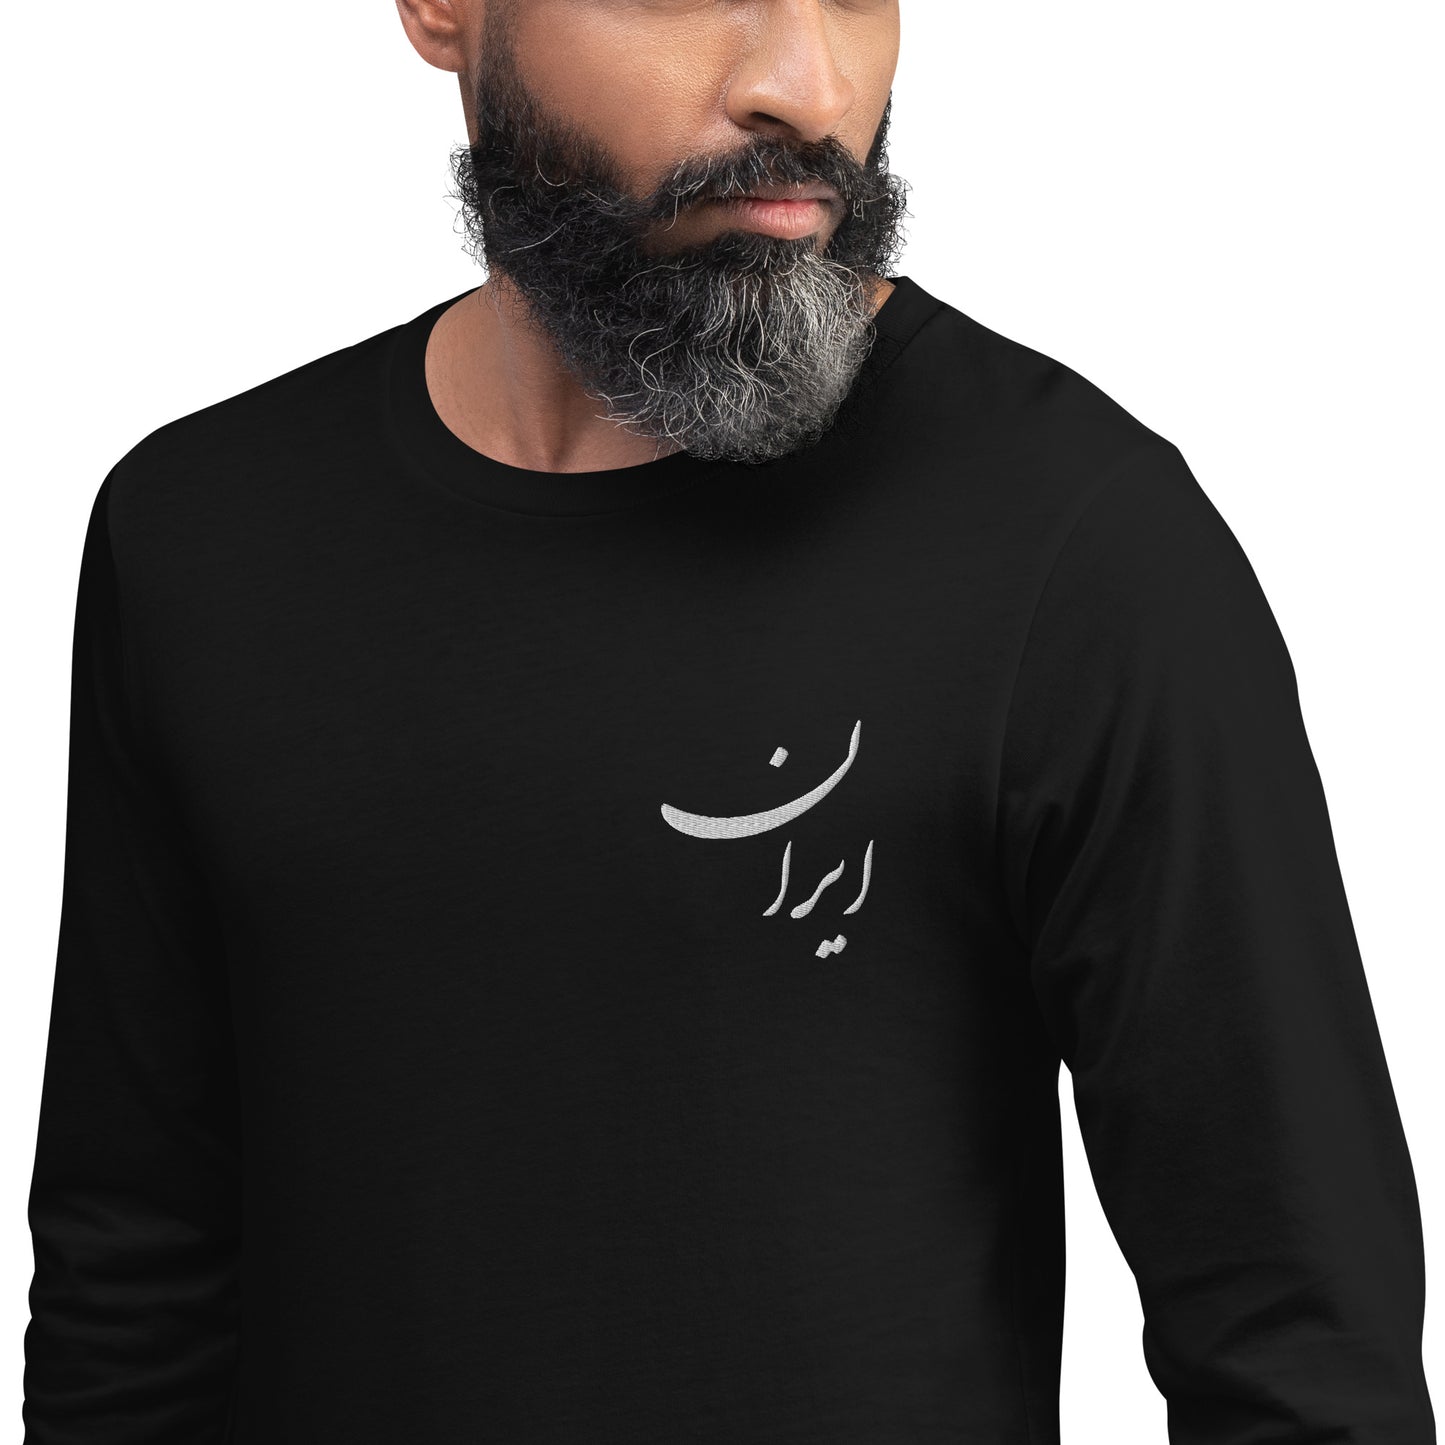 Men's Cotton Long Sleeve Tee Light Embroidery Iran /پیراهن نخی آستین‌بلند مردانه با نخ‌نوشت روشن ایران